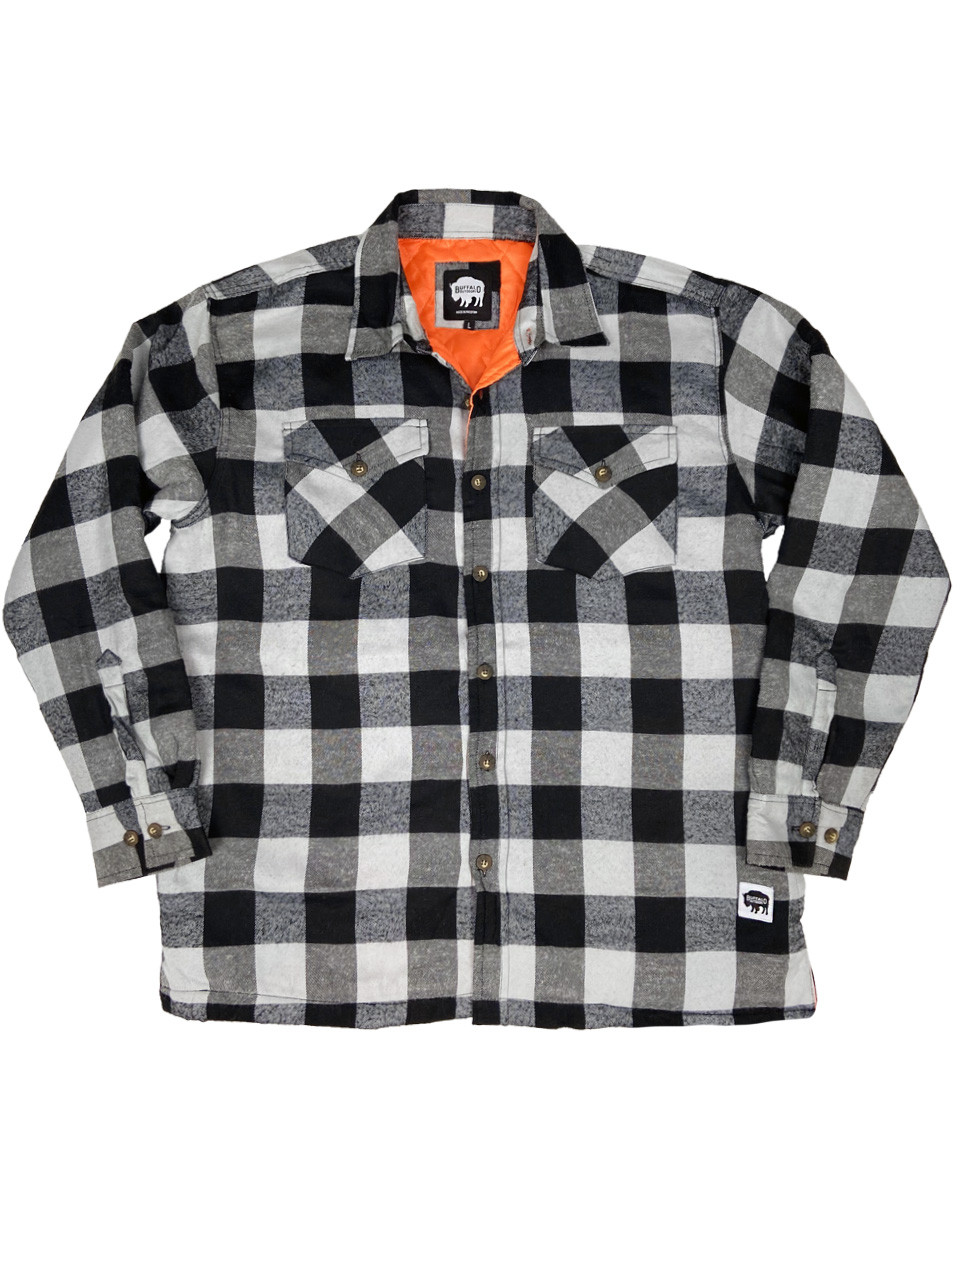 Stencil Flannel Check Shirt - Orange/Black  Checked flannel shirt, White  c, Check shirt